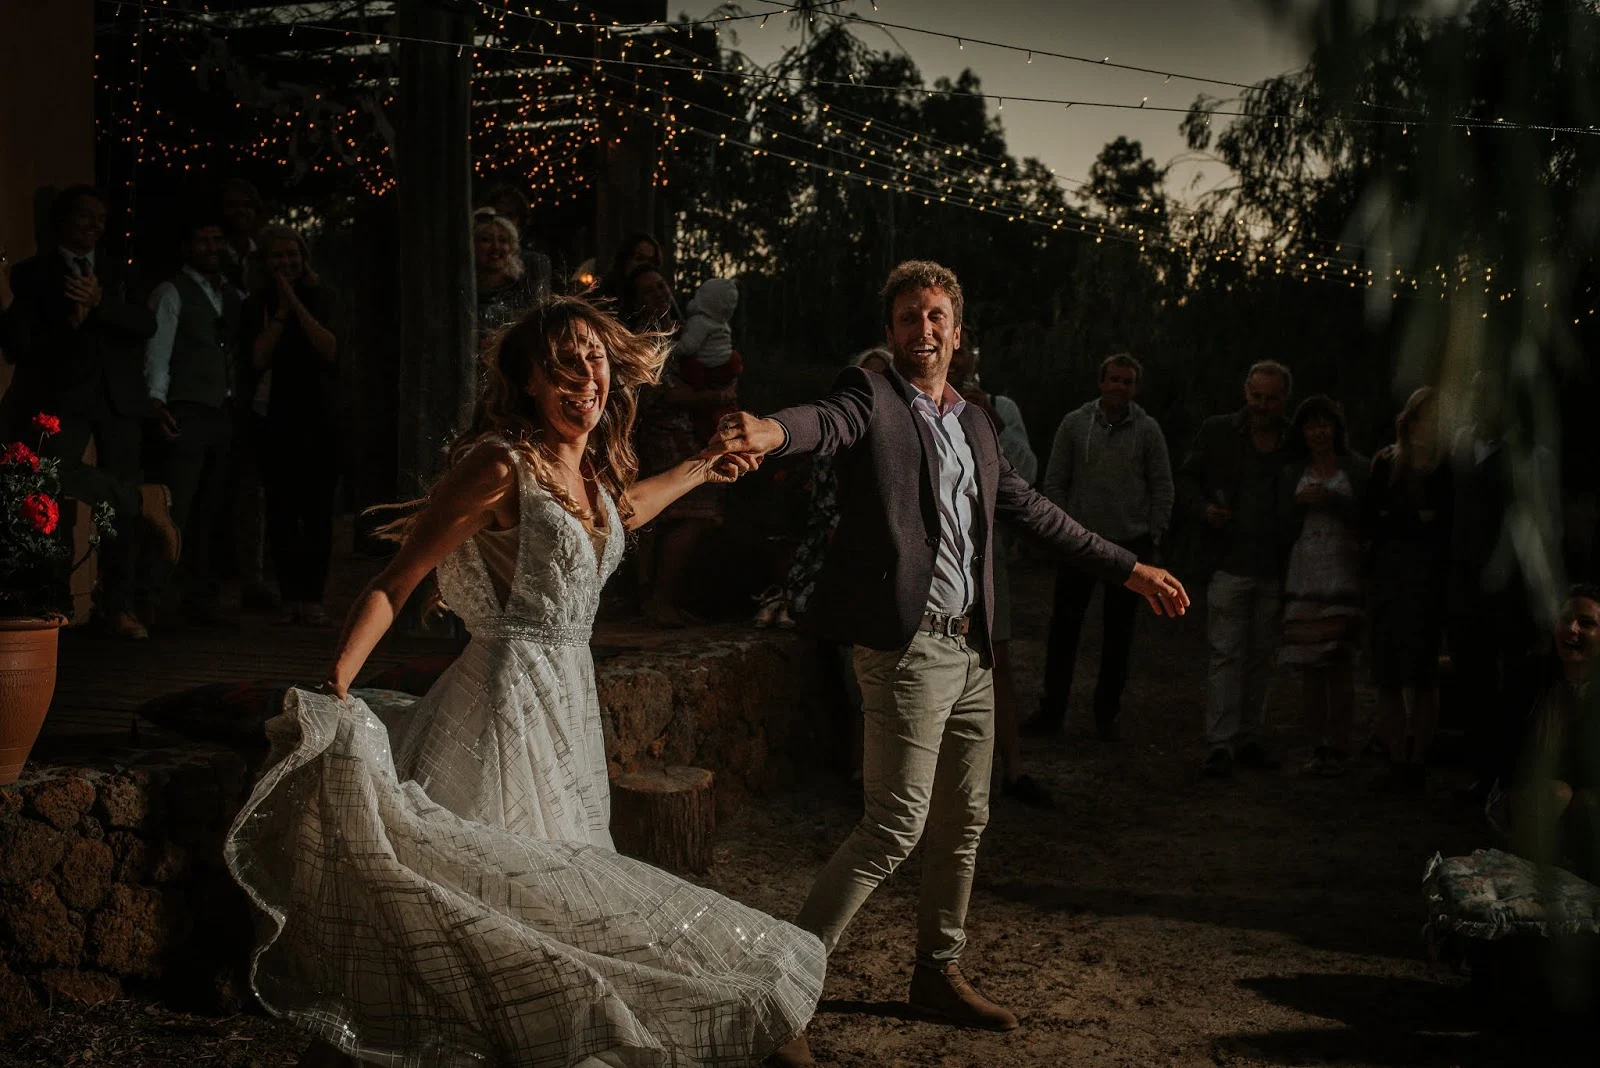 DIY MARGARET RIVER WEDDINGS PERTH MILA + JESSE